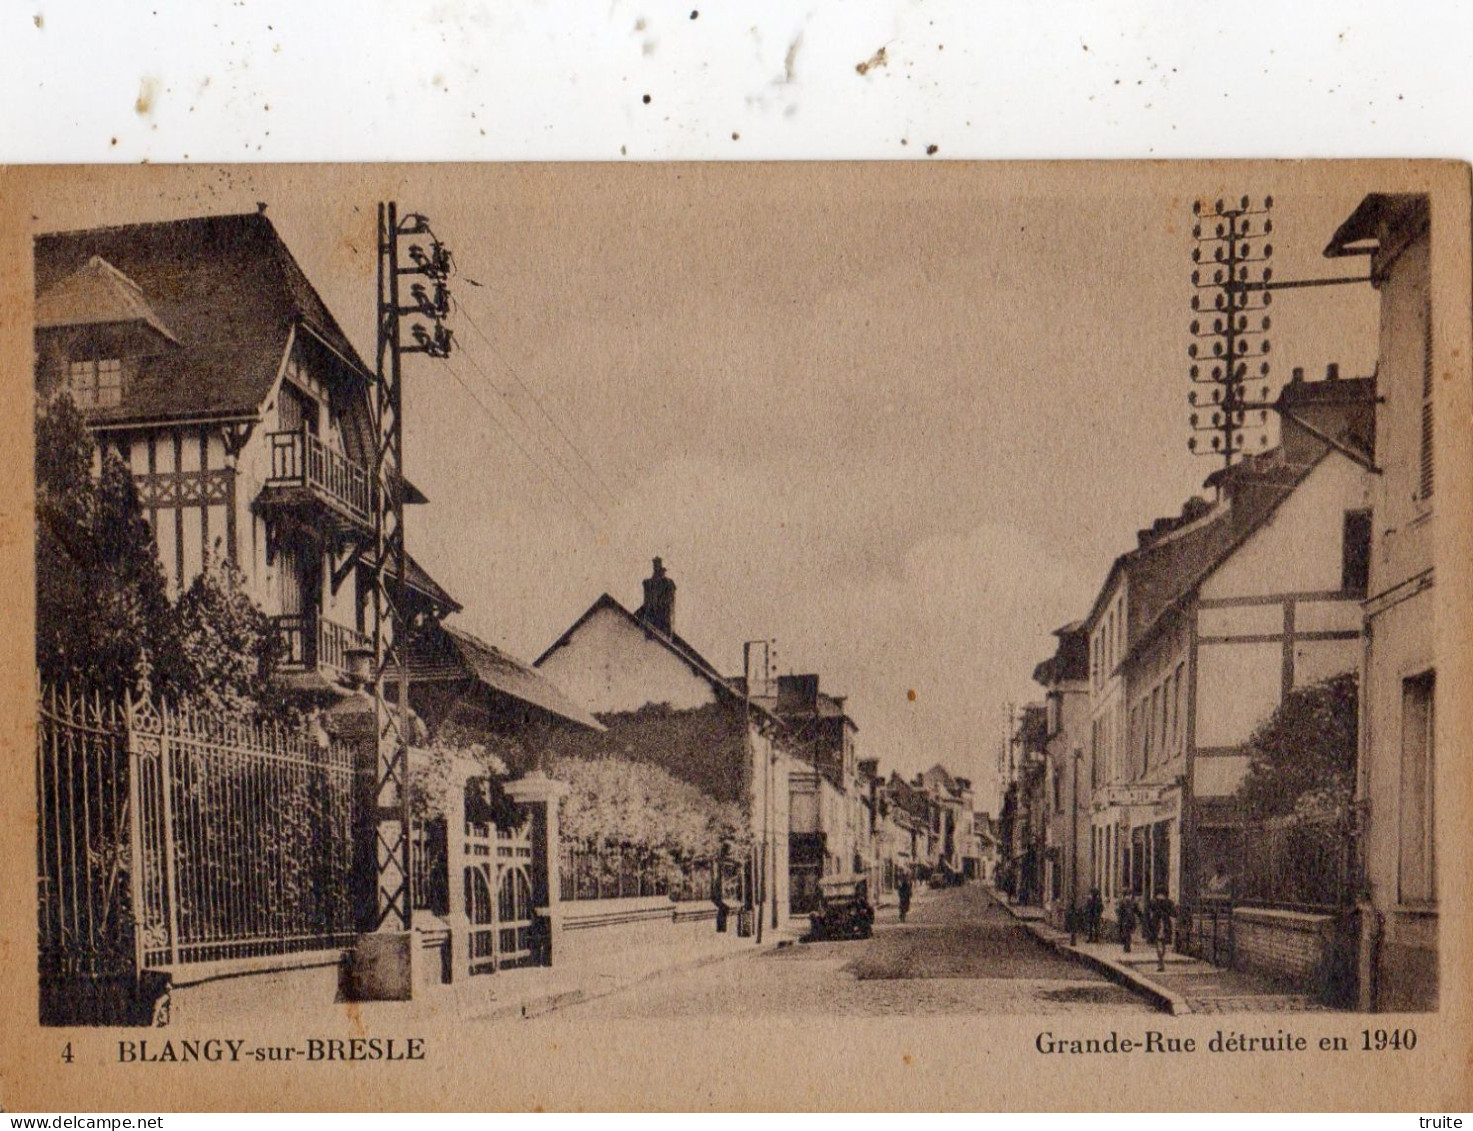 BLANGY-SUR-BRESLE GRANDE-RUE DETRUITE EN 1940 - Blangy-sur-Bresle